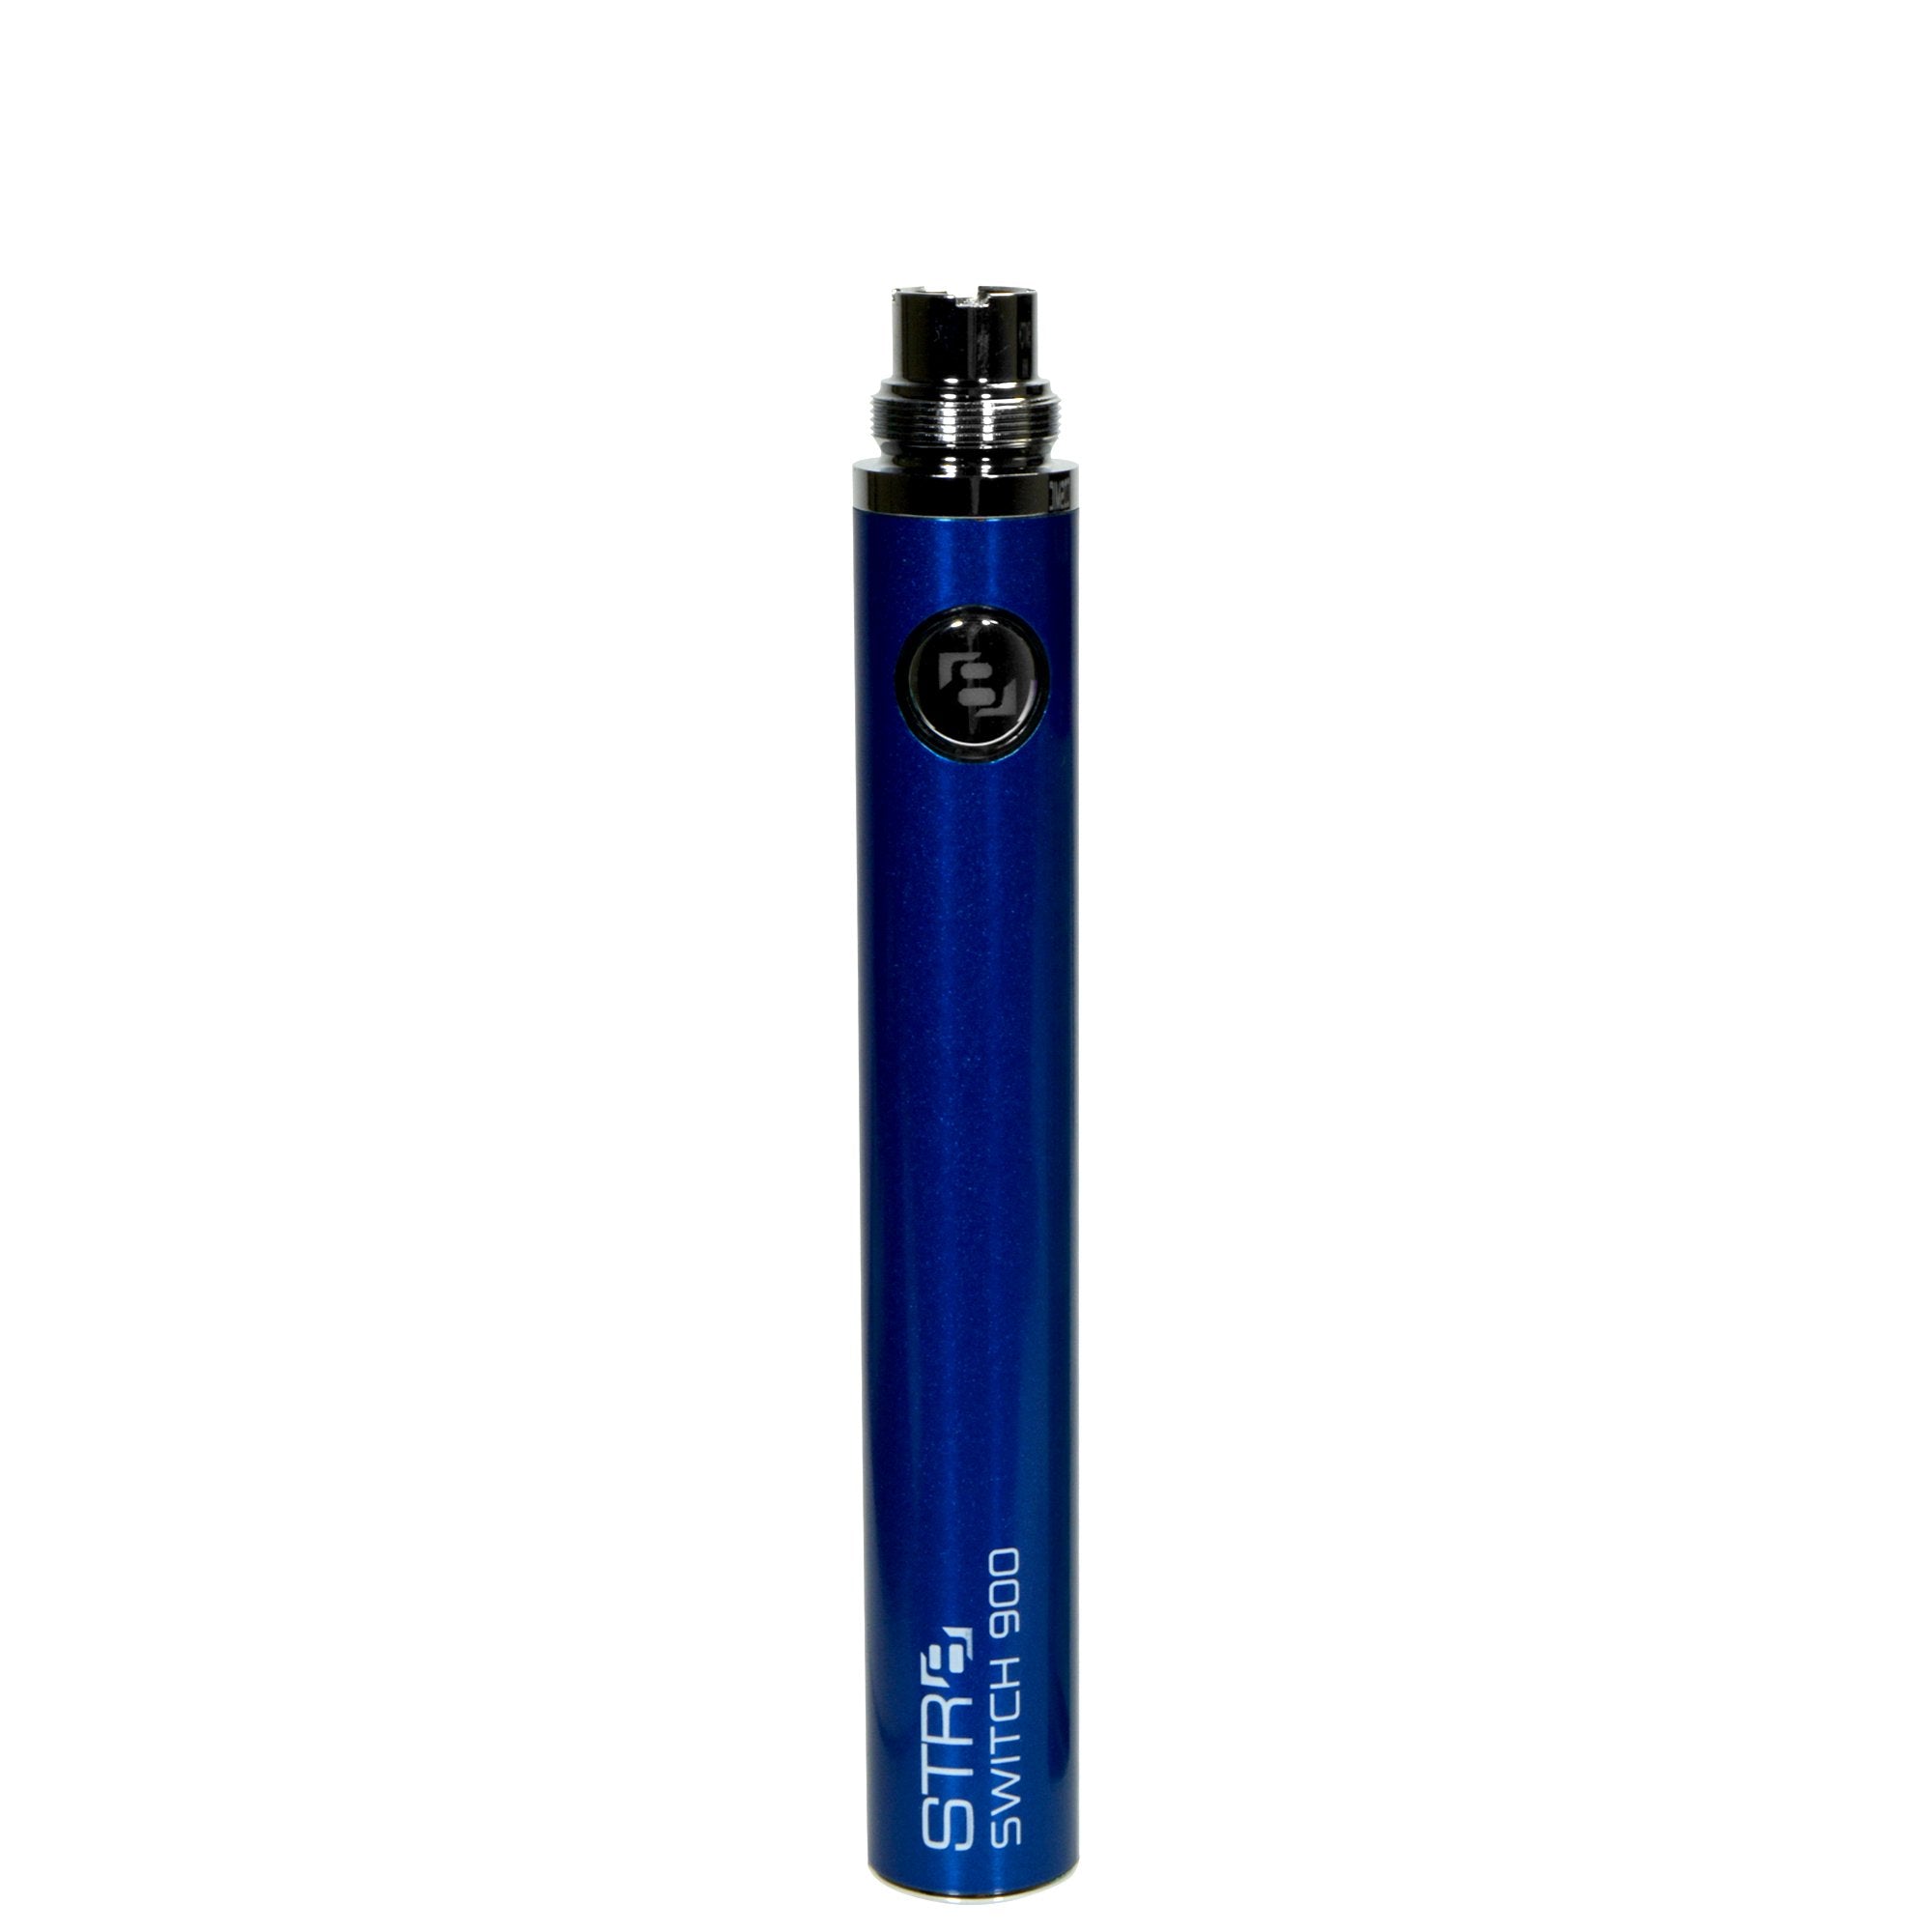 STR8 | Switch Evod Vape Battery 900mAh - Blue - 5 Count - 2